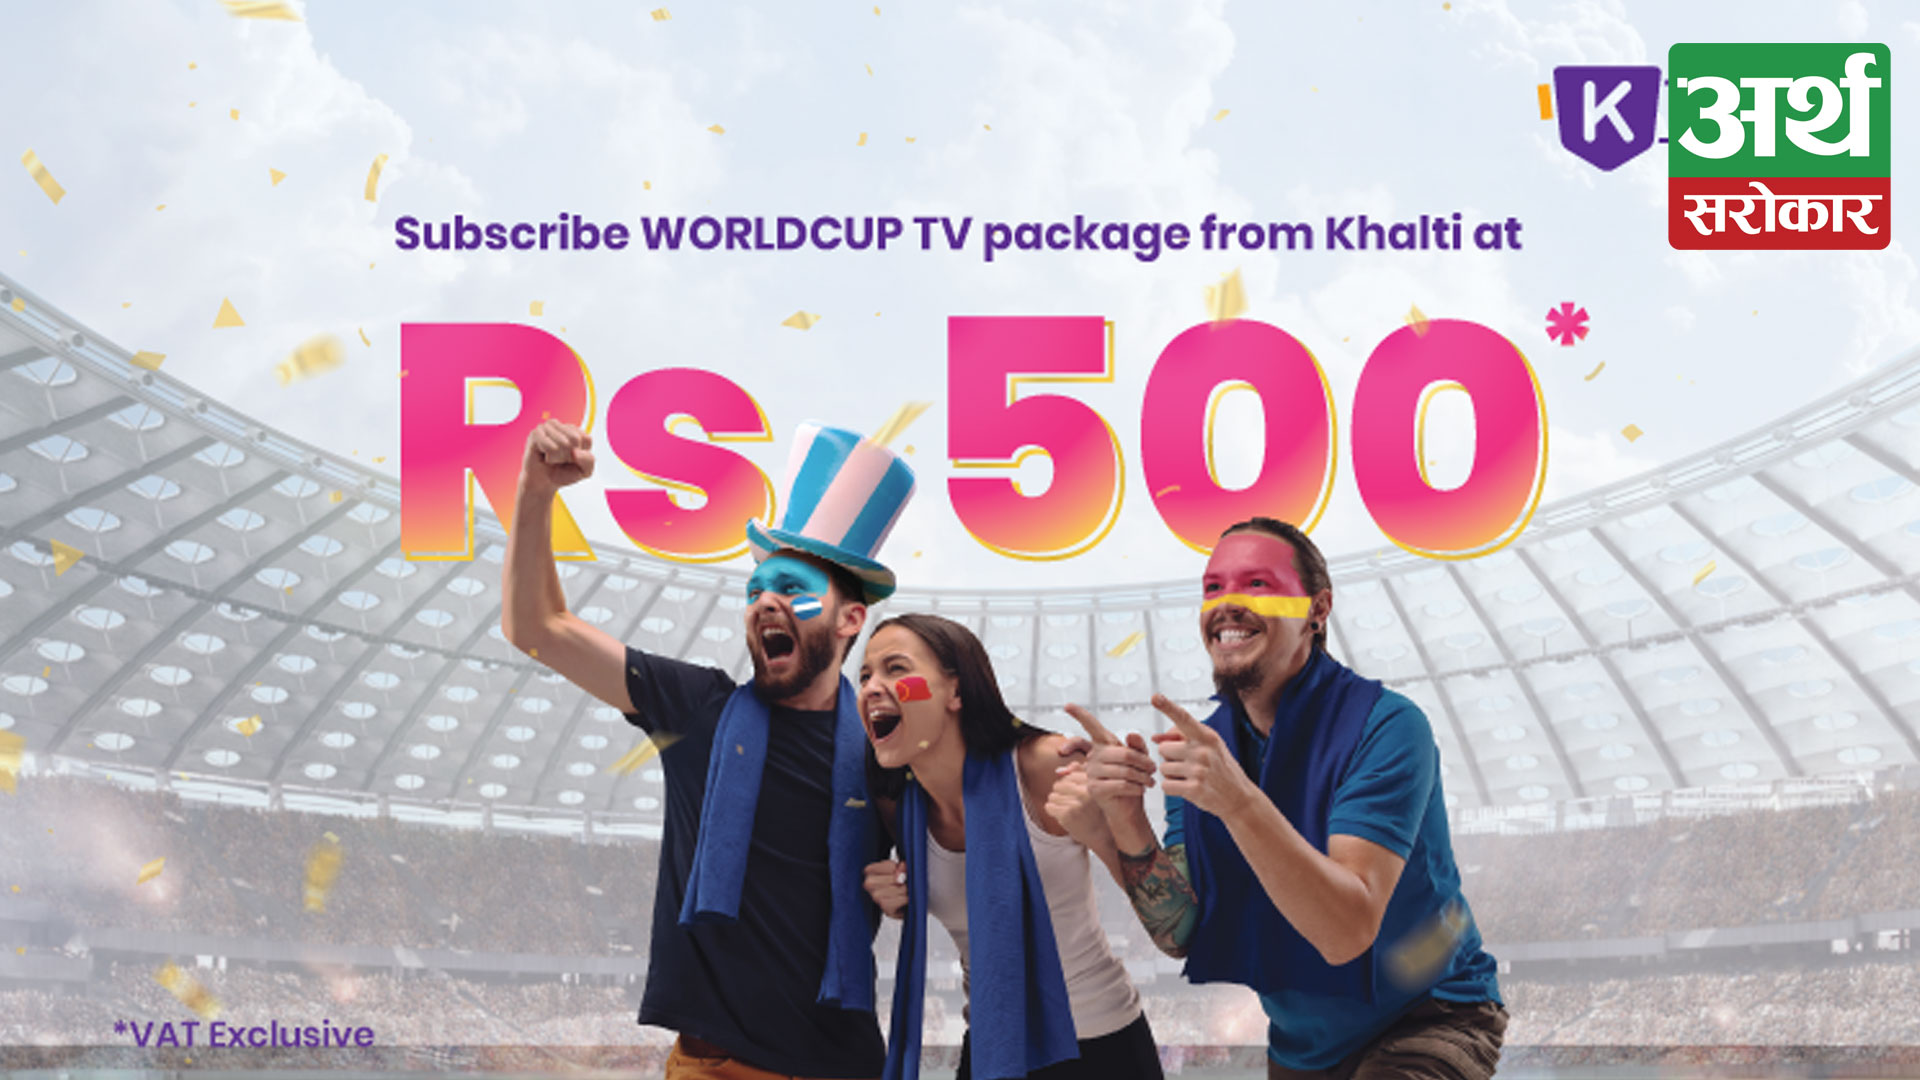 Khalti brings World Cup TV package